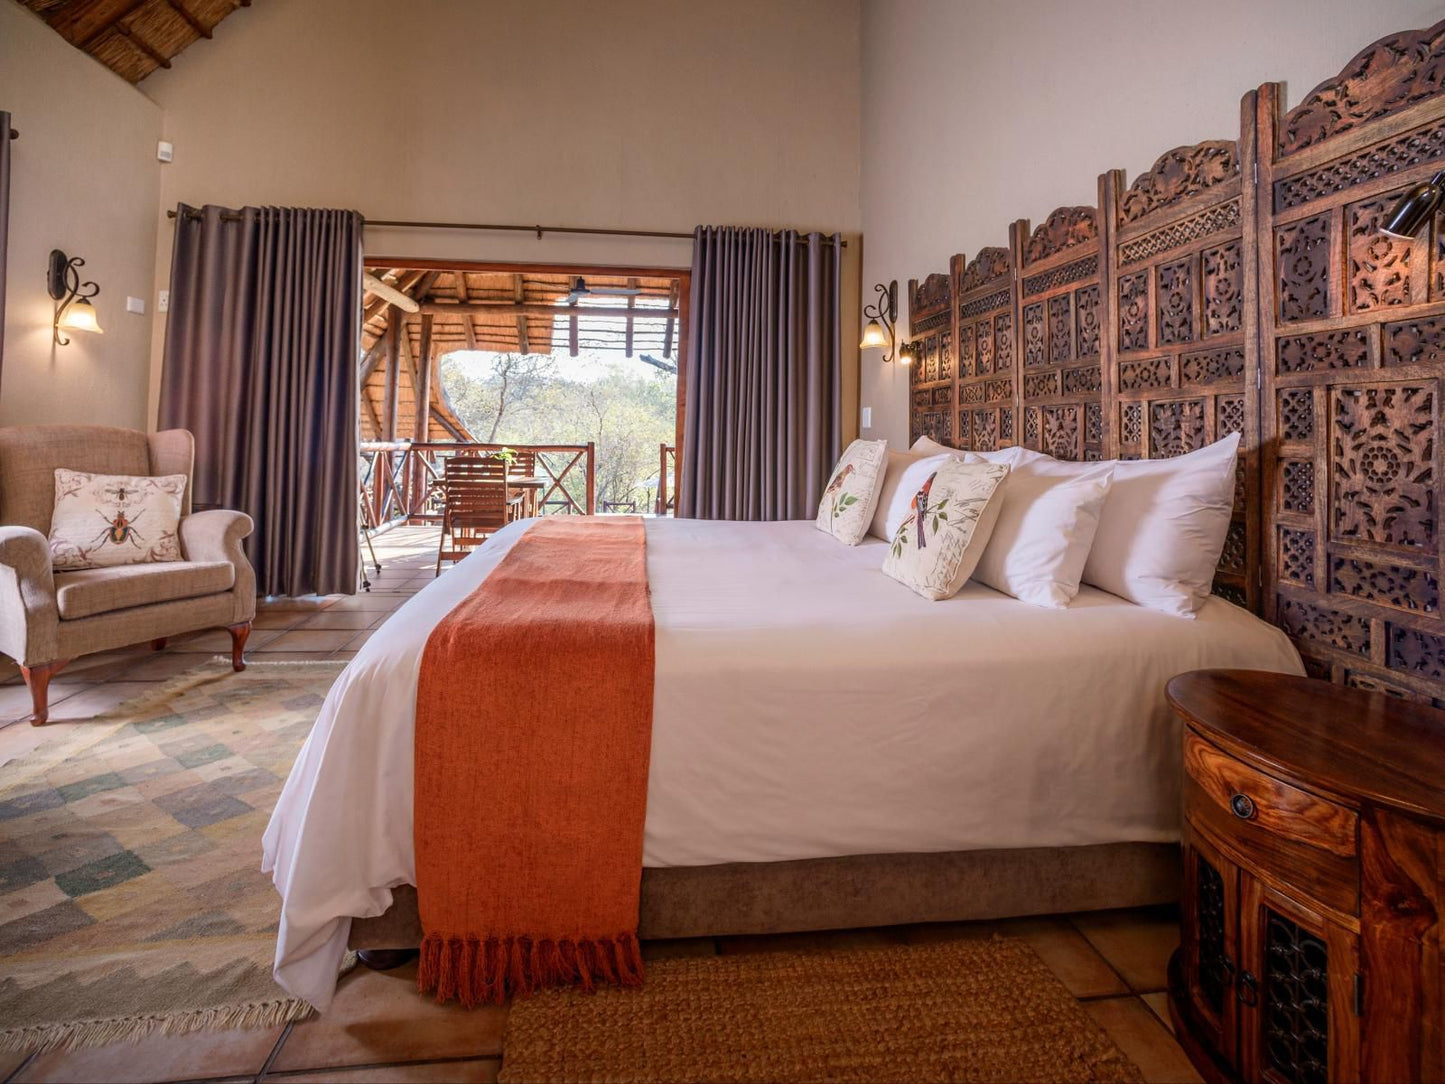 La Kruger Lifestyle Lodge Marloth Park Mpumalanga South Africa Bedroom